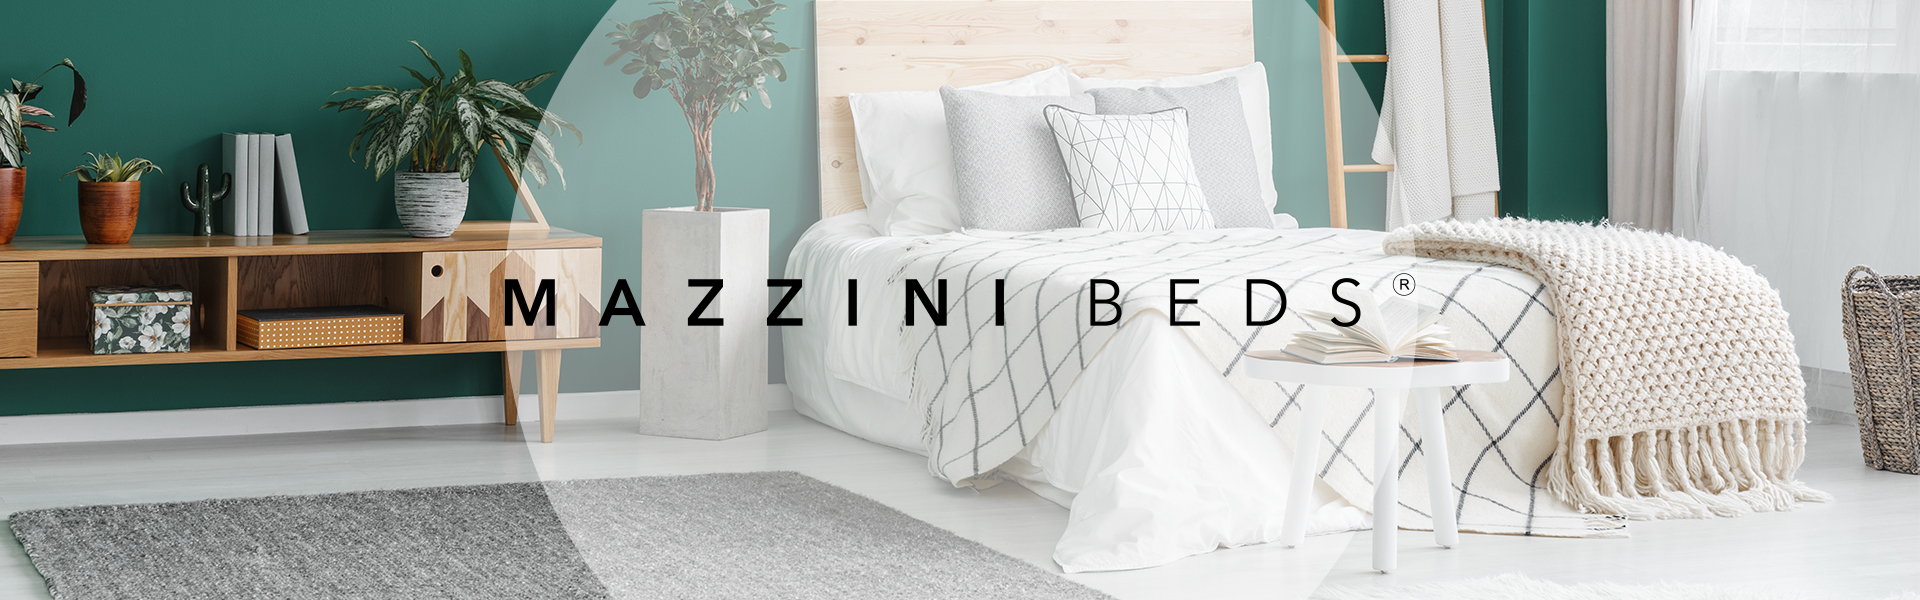 Sänky Mazzini Beds Nerin 180x200cm, punainen 